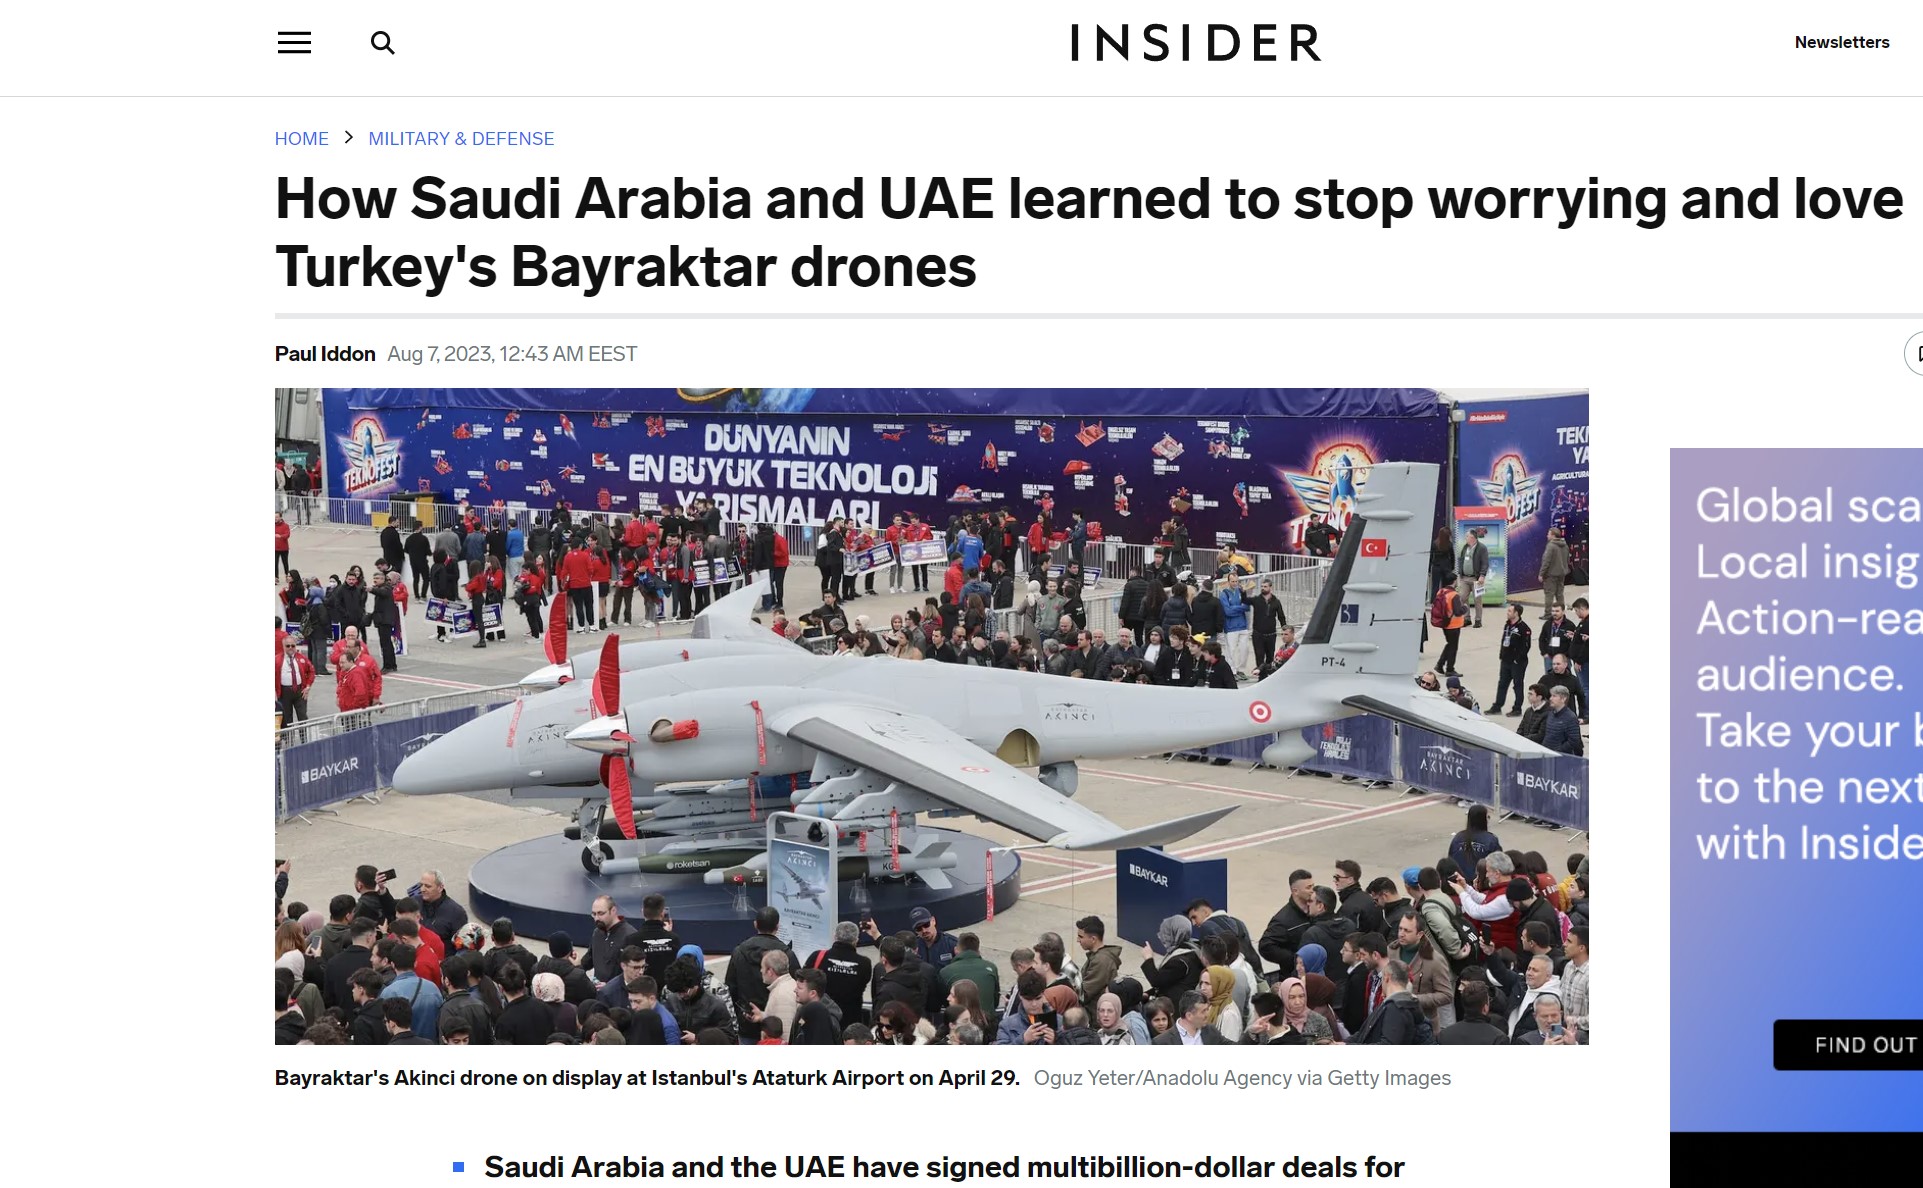 Insider: Πώς η Σαουδική Αραβία και τα Ηνωμένα Αραβικά Εμιράτα έμαθαν να σταματούν να ανησυχούν και να αγαπούν τα drones Bayraktar της Τουρκίας – Είναι πιο αξιόπιστα από τα Κινεζικά και φθηνότερα από τα δυτικά